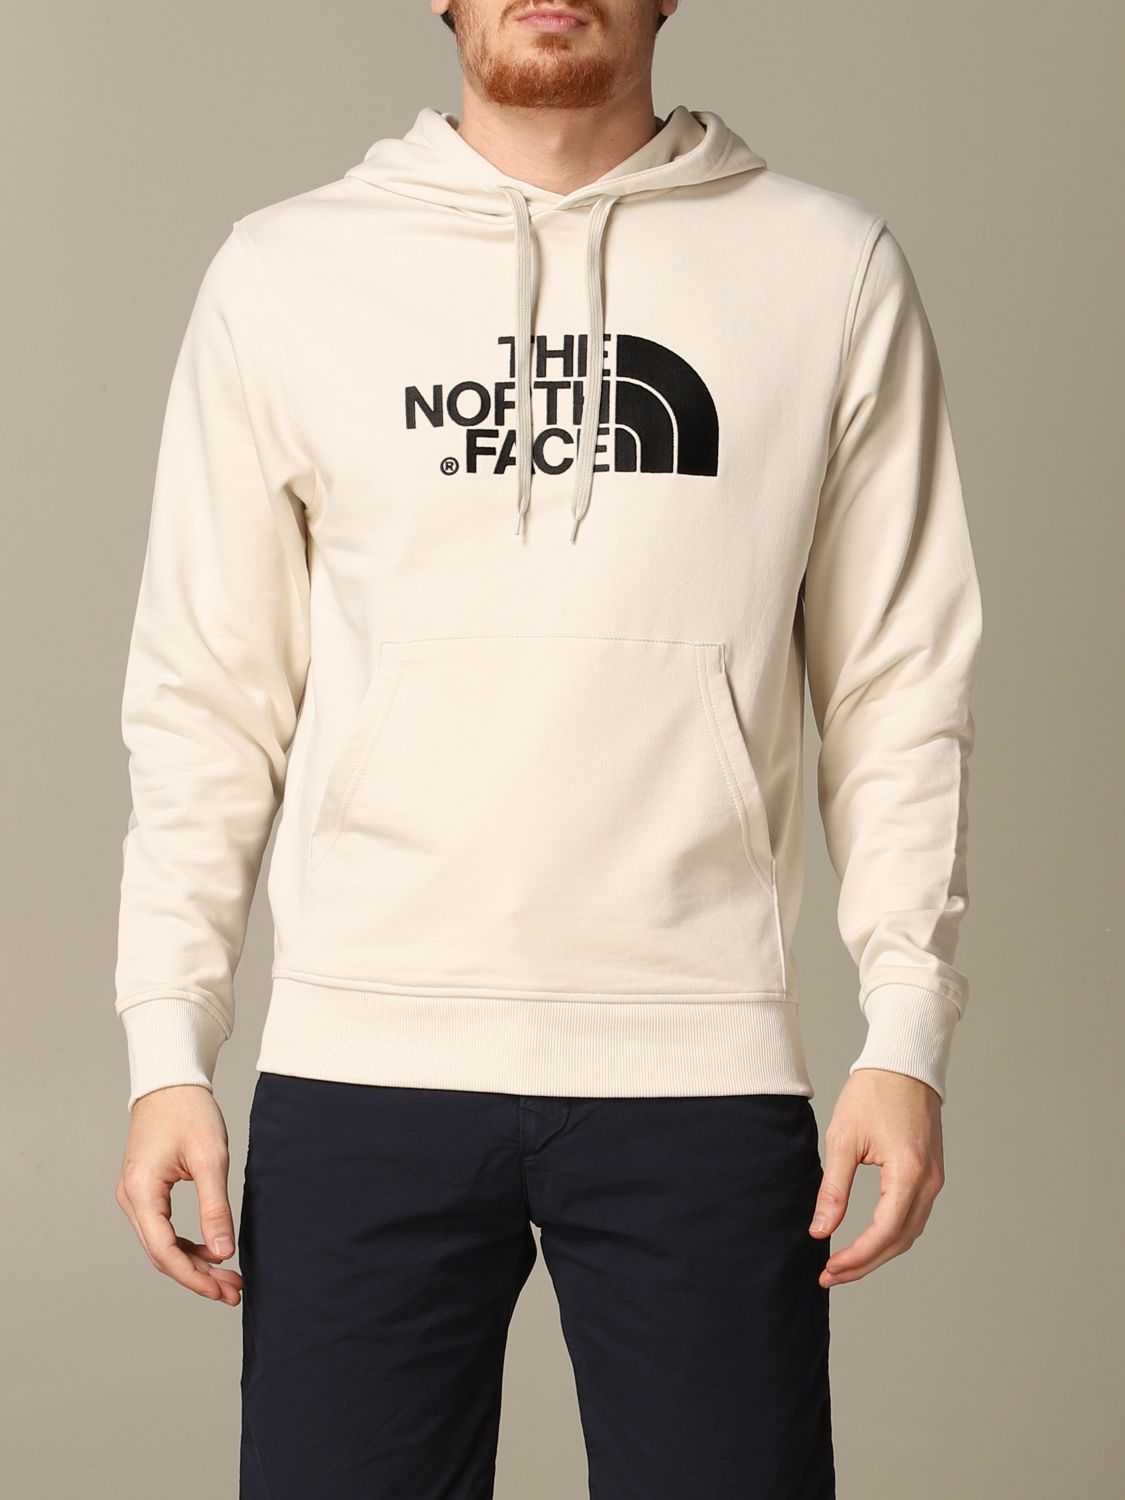 north face sweatshirts cheap